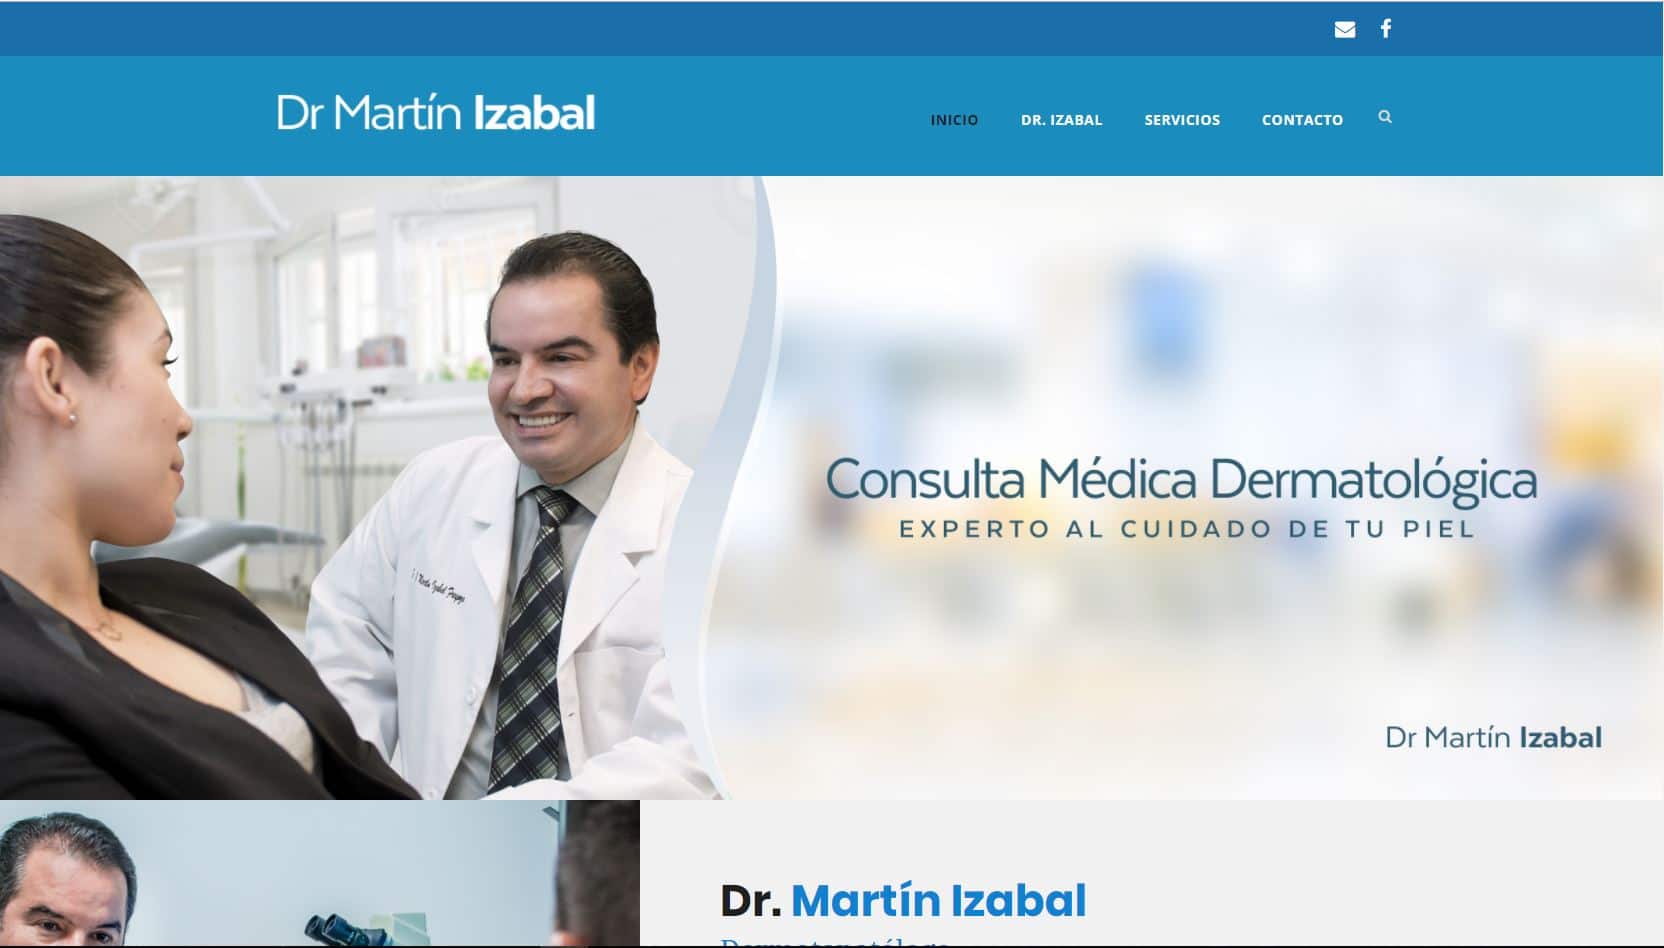 Dr. Martín Izabal